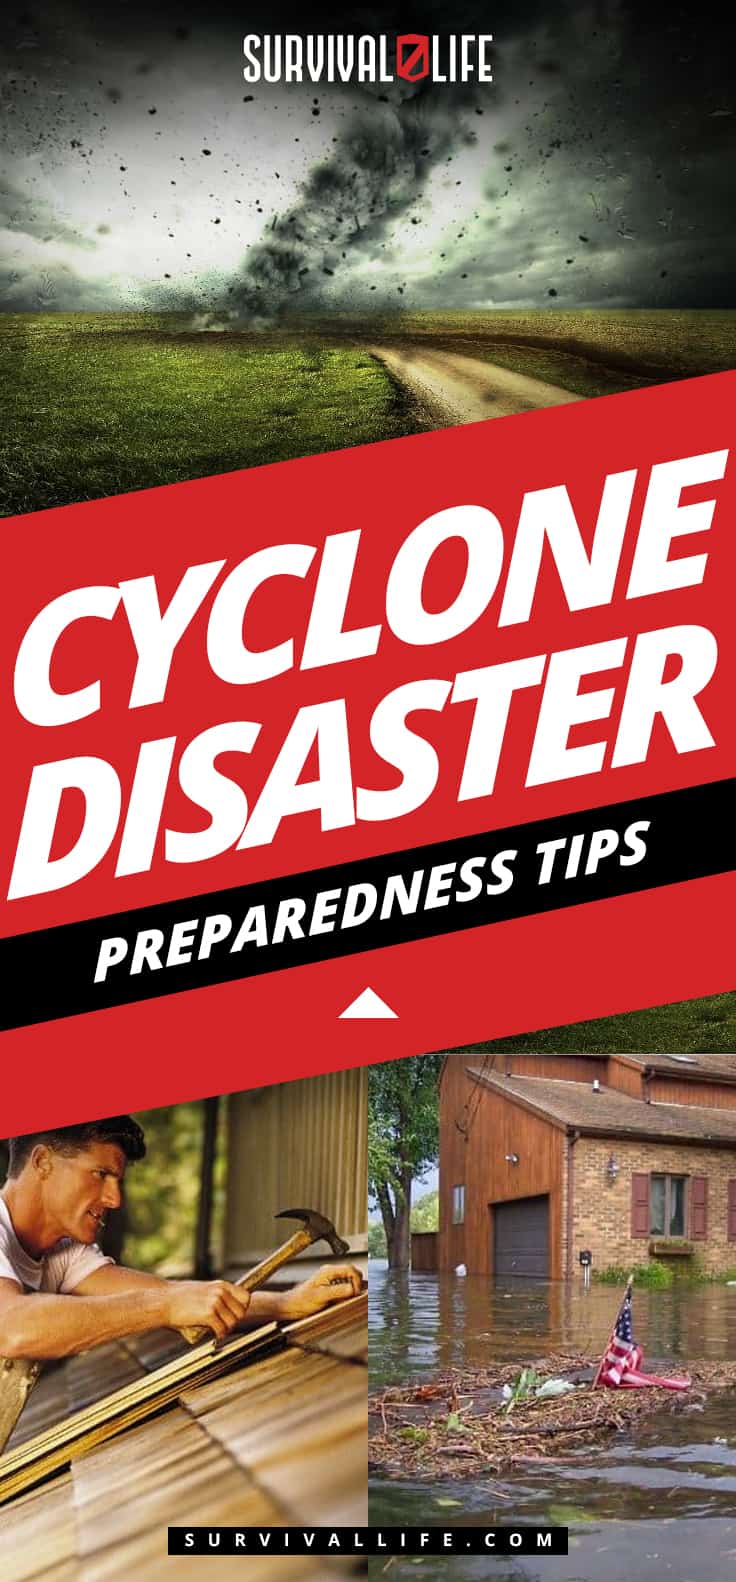 Cyclone Disaster Preparedness Tips | Survival Life